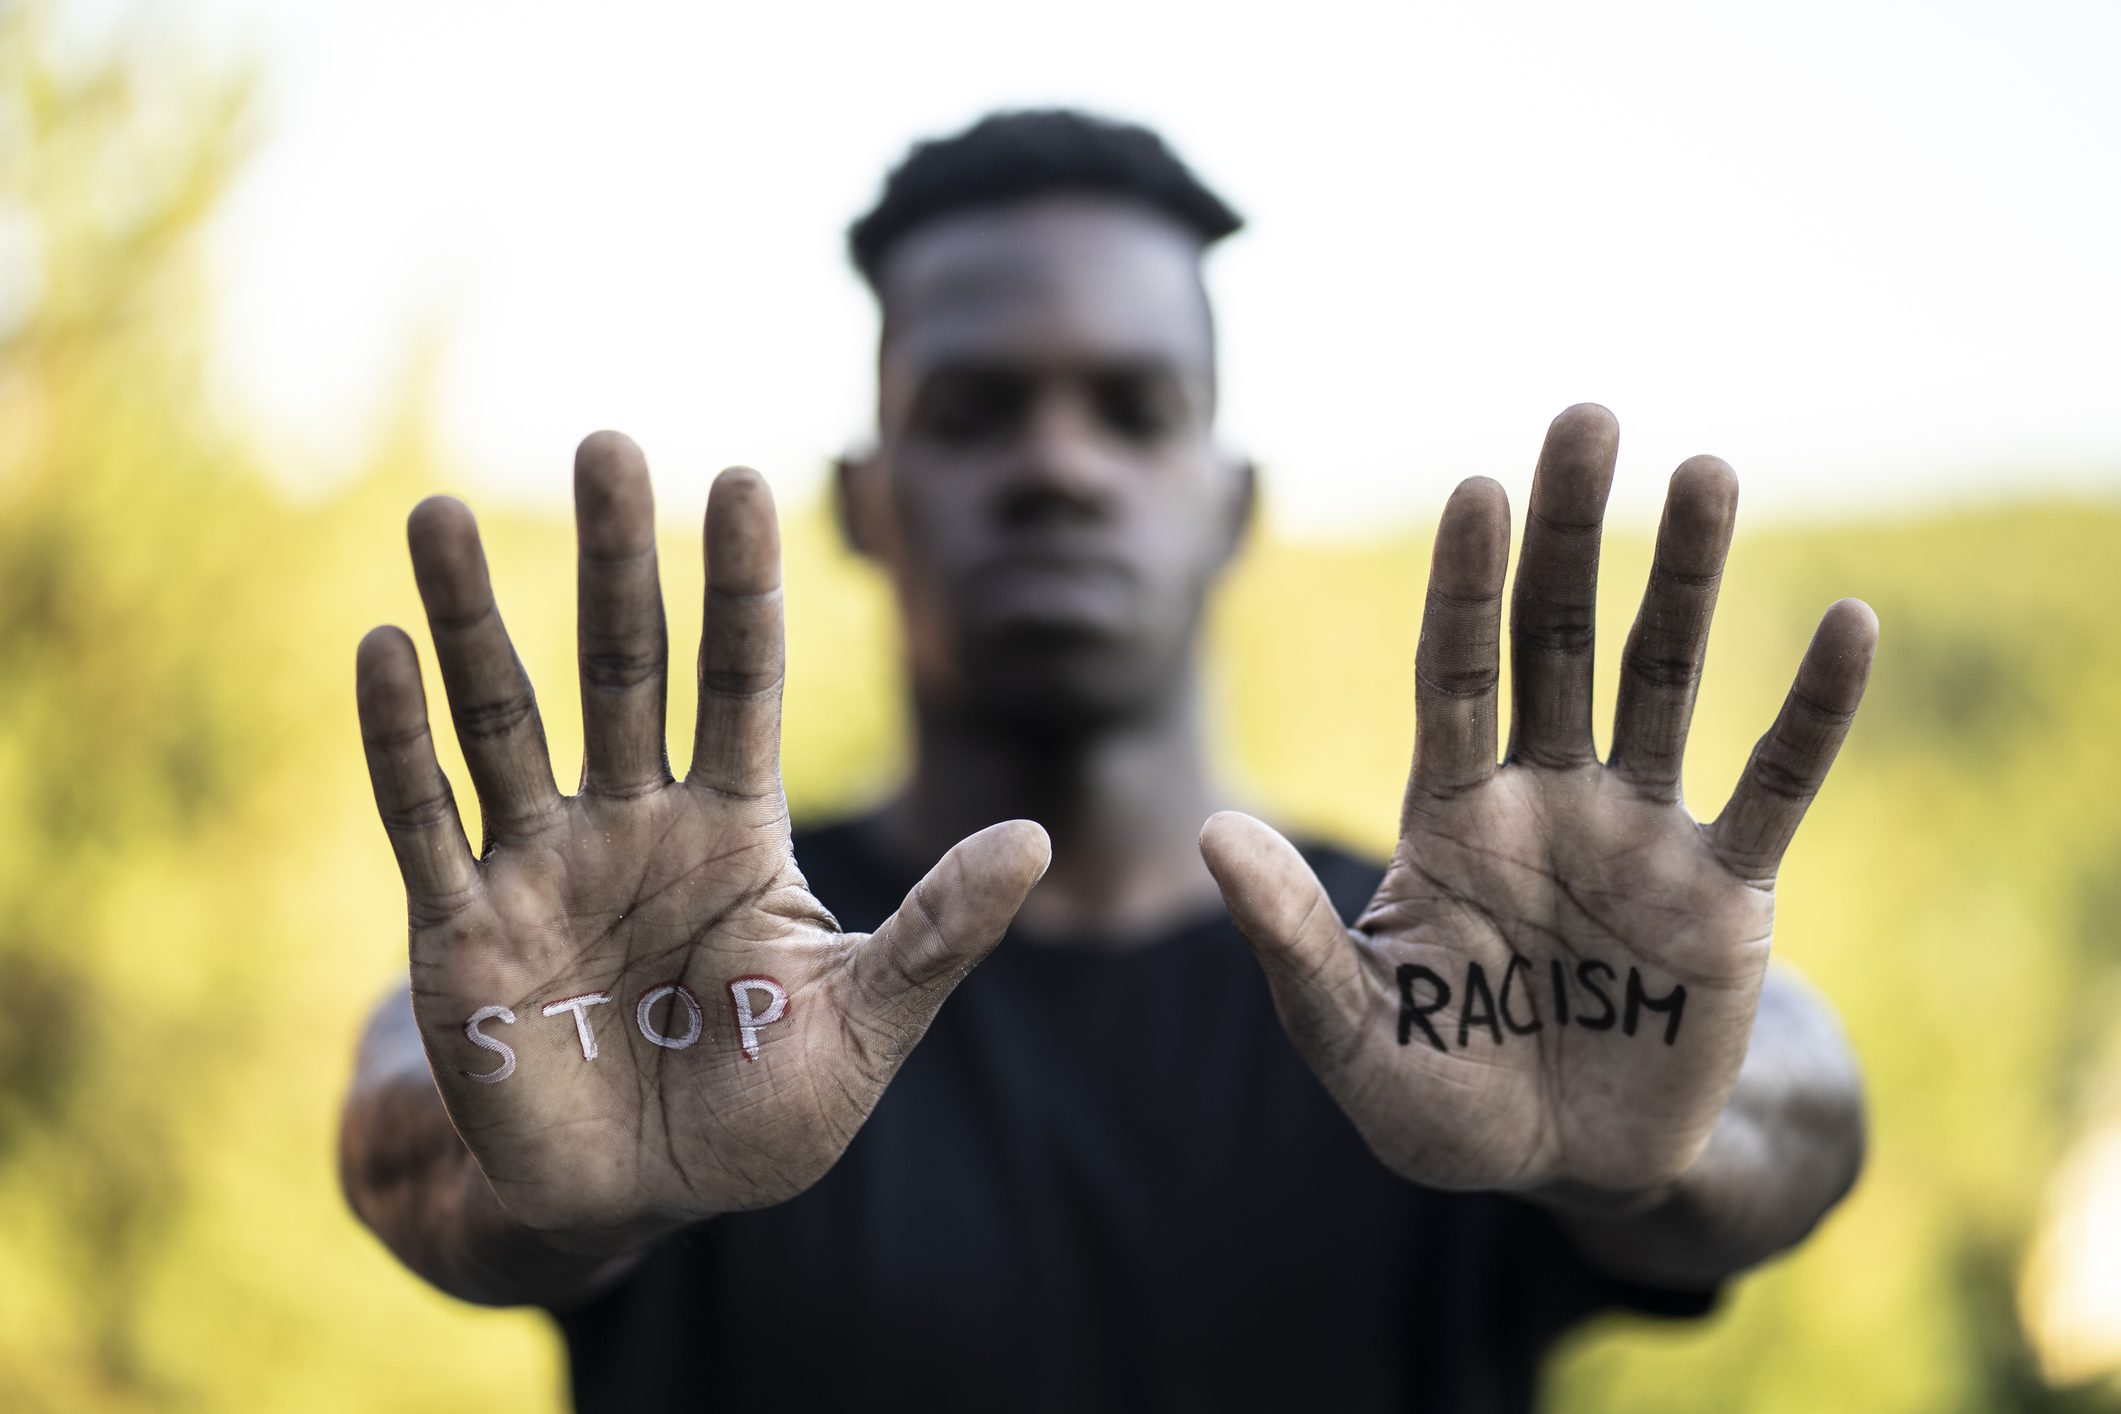 "Stop Racism" message concept